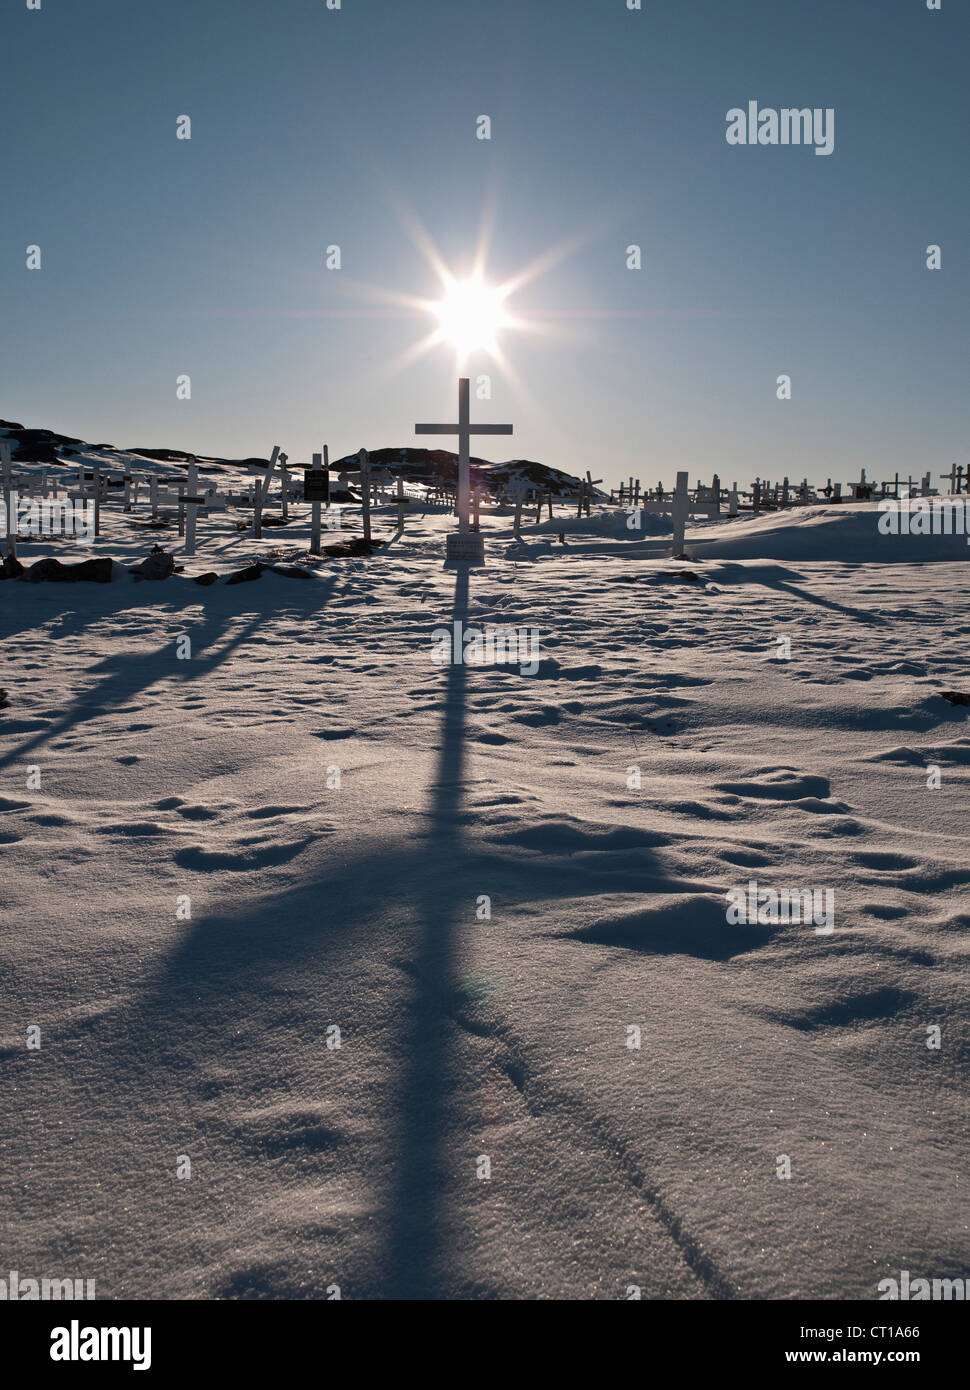 Crosses in graveyard casting shadows Stock Photo